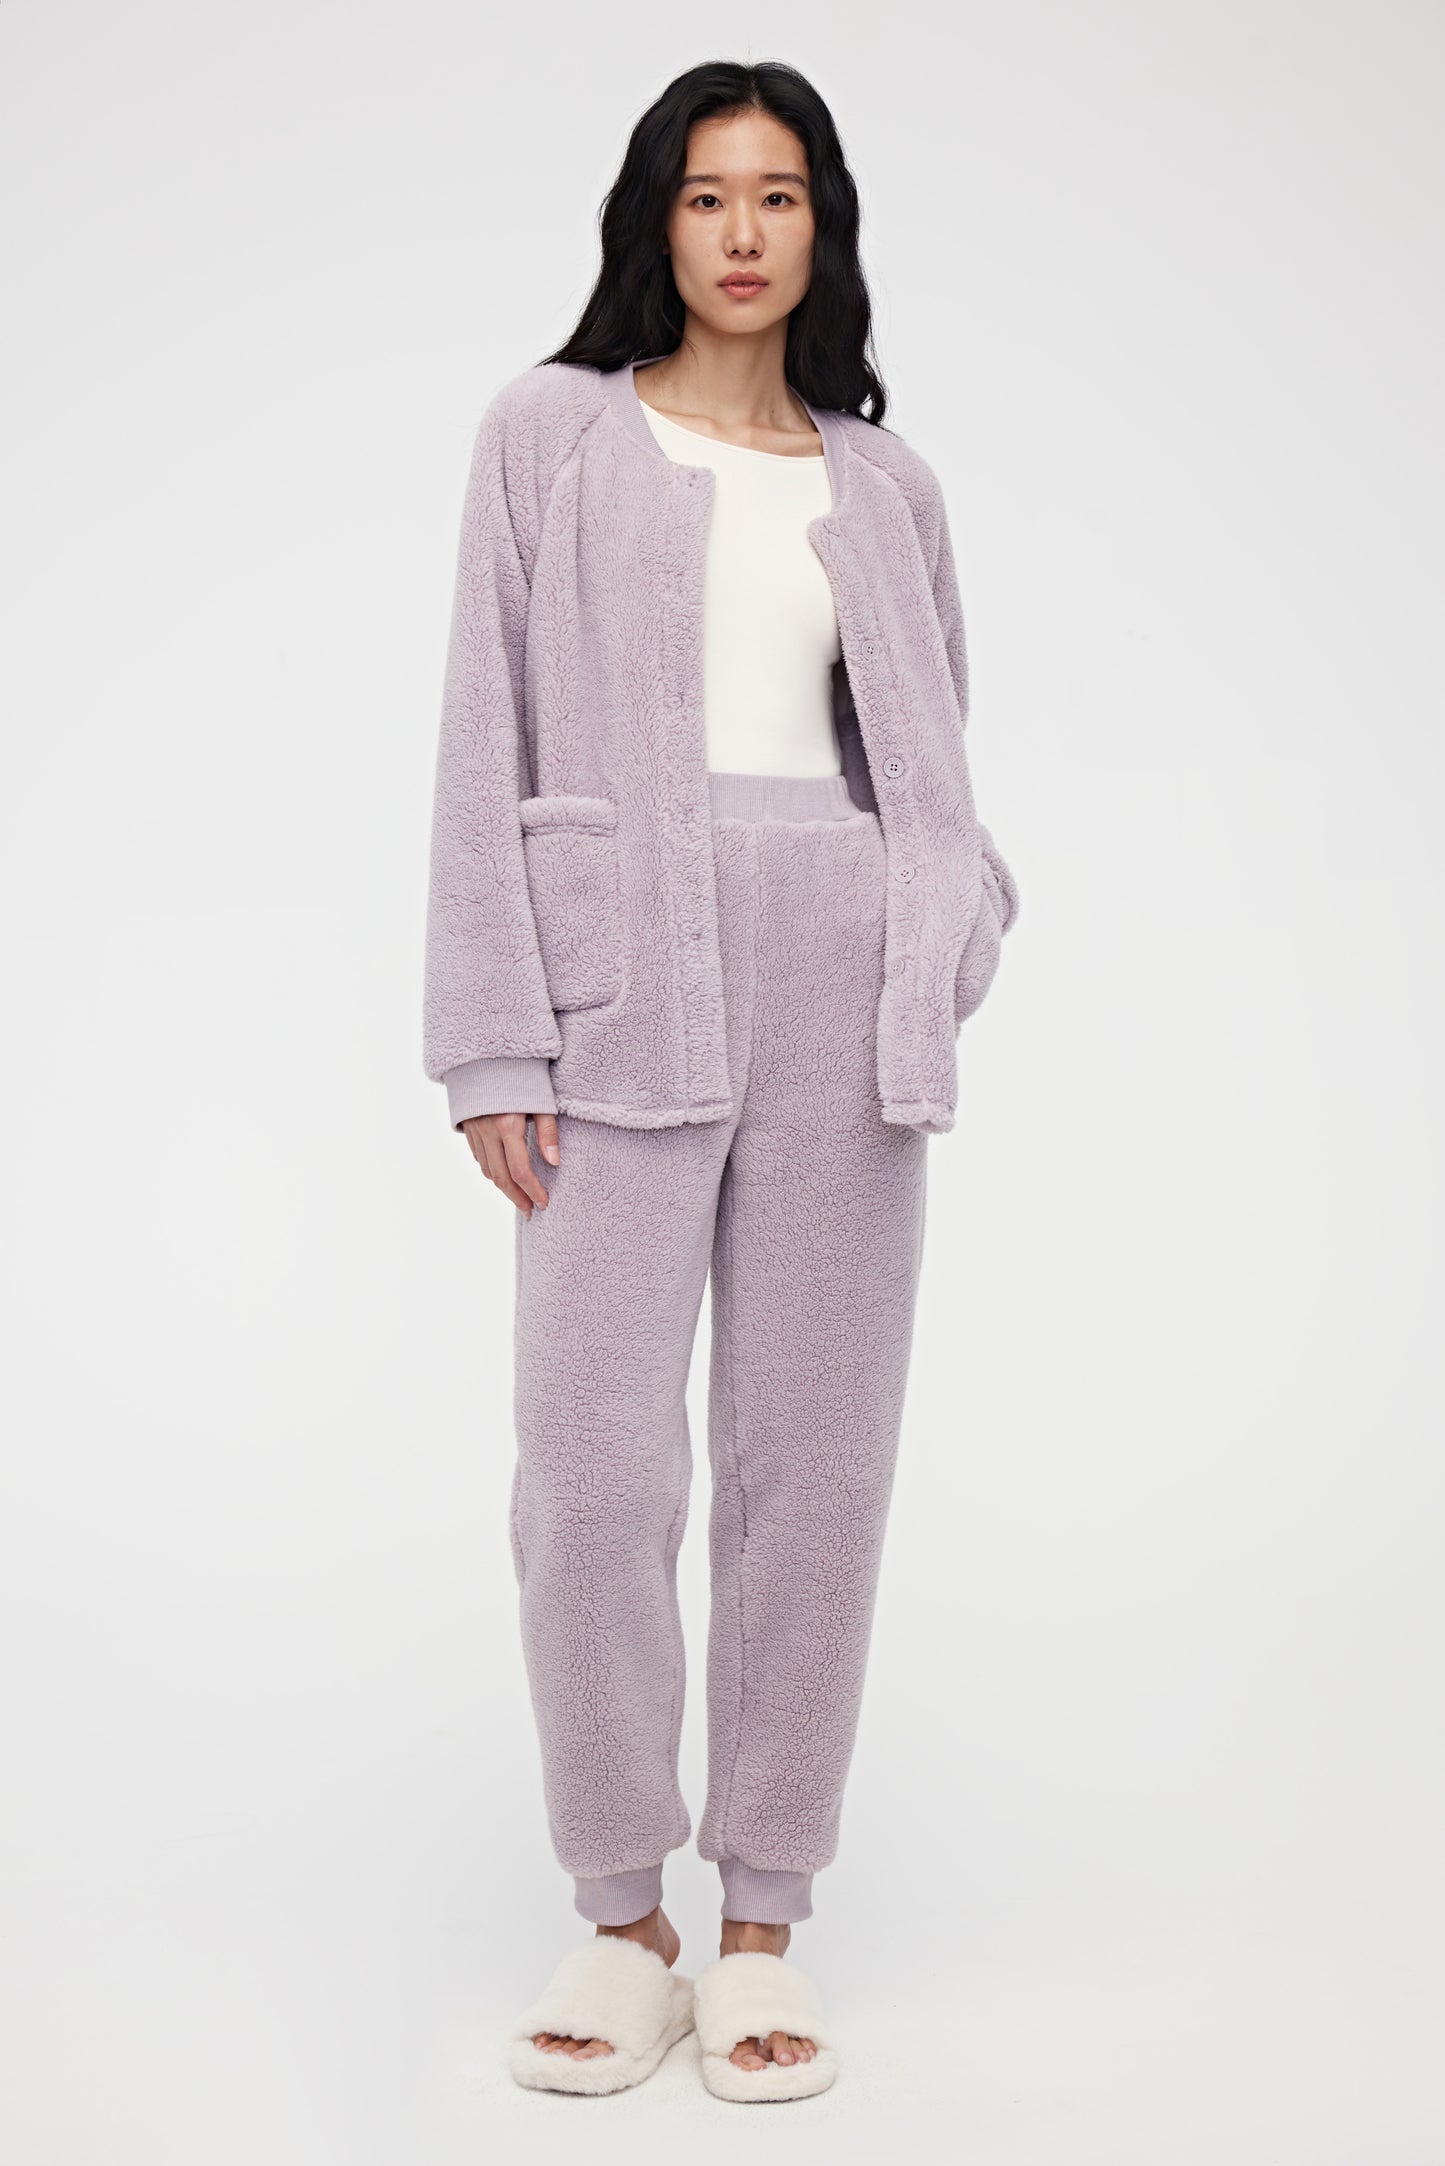 Woman wearing purple Fleece Pajama Set